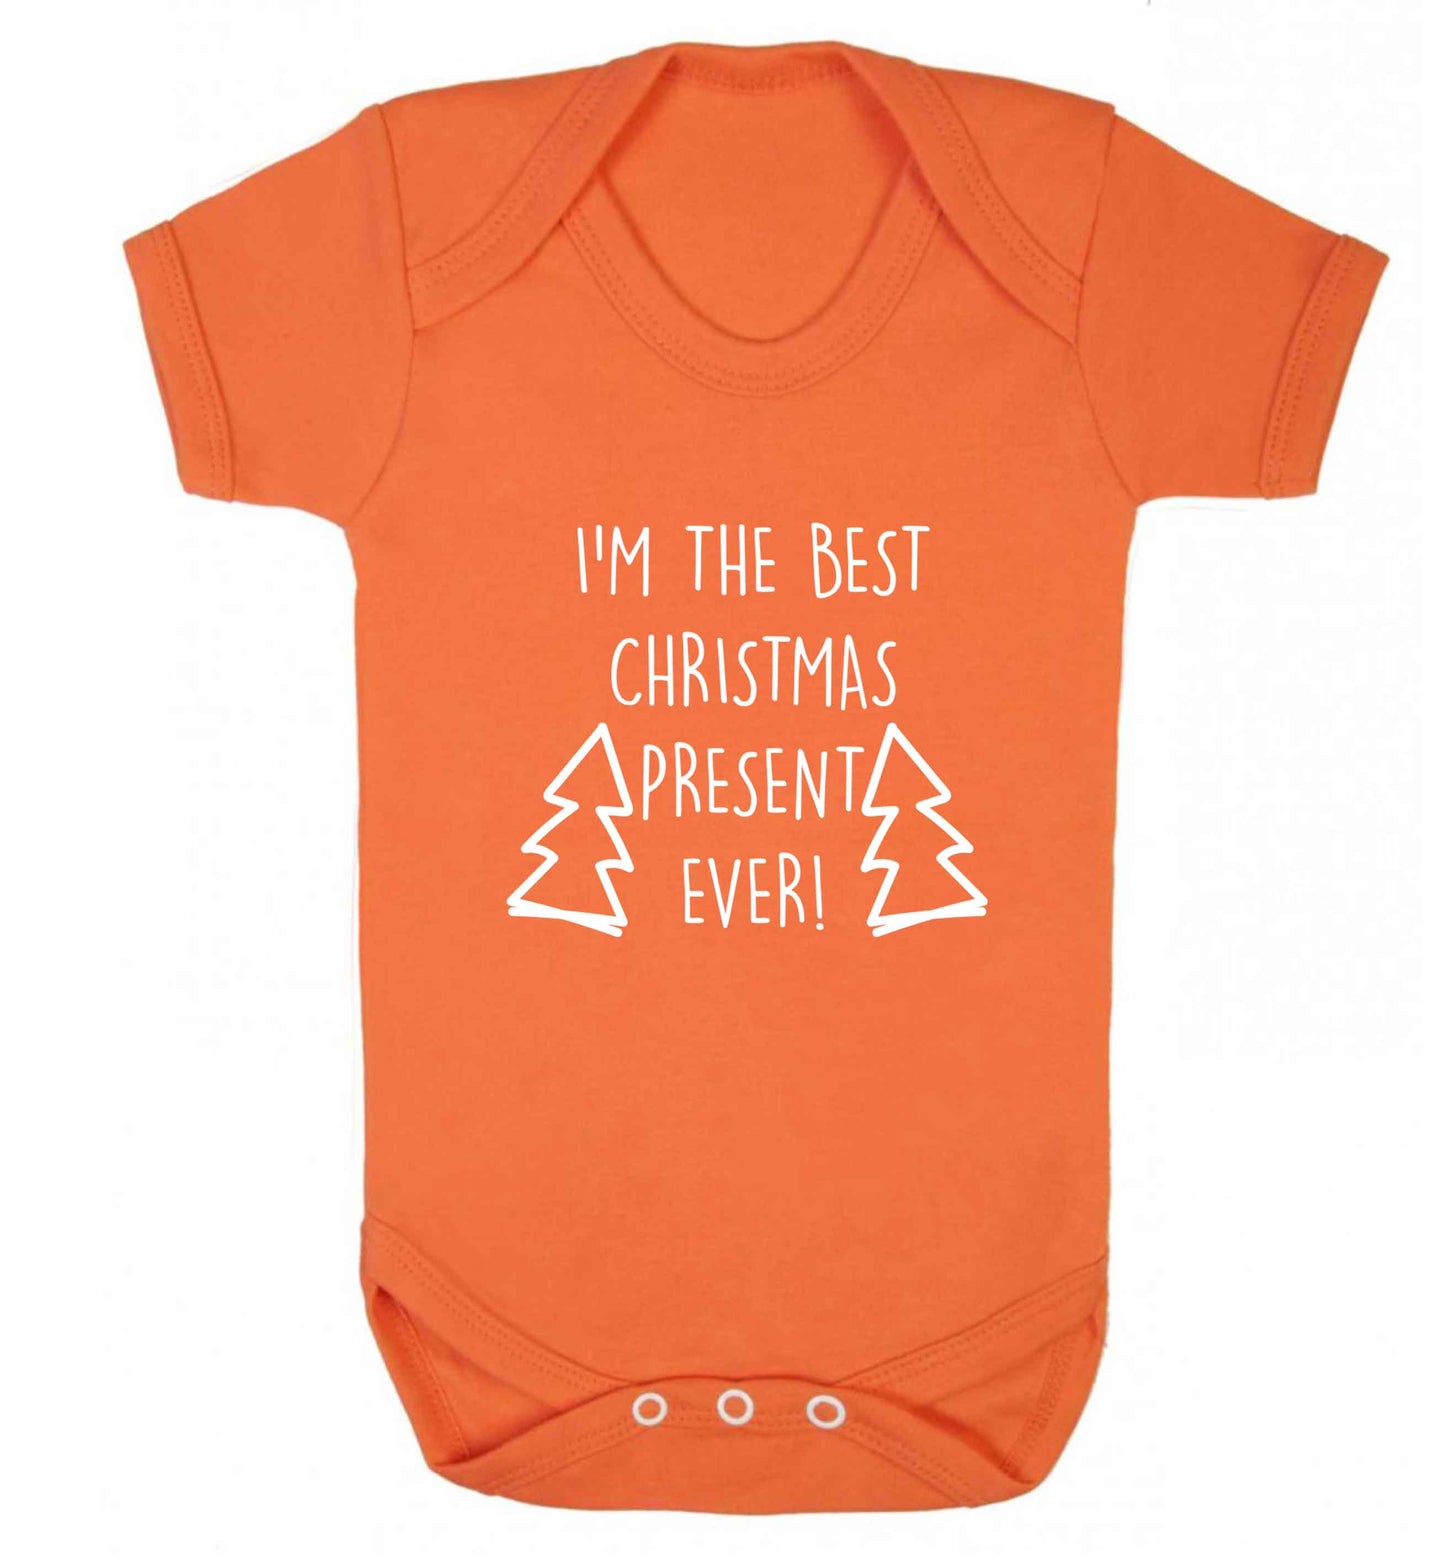 I'm the best Christmas present ever baby vest orange 18-24 months